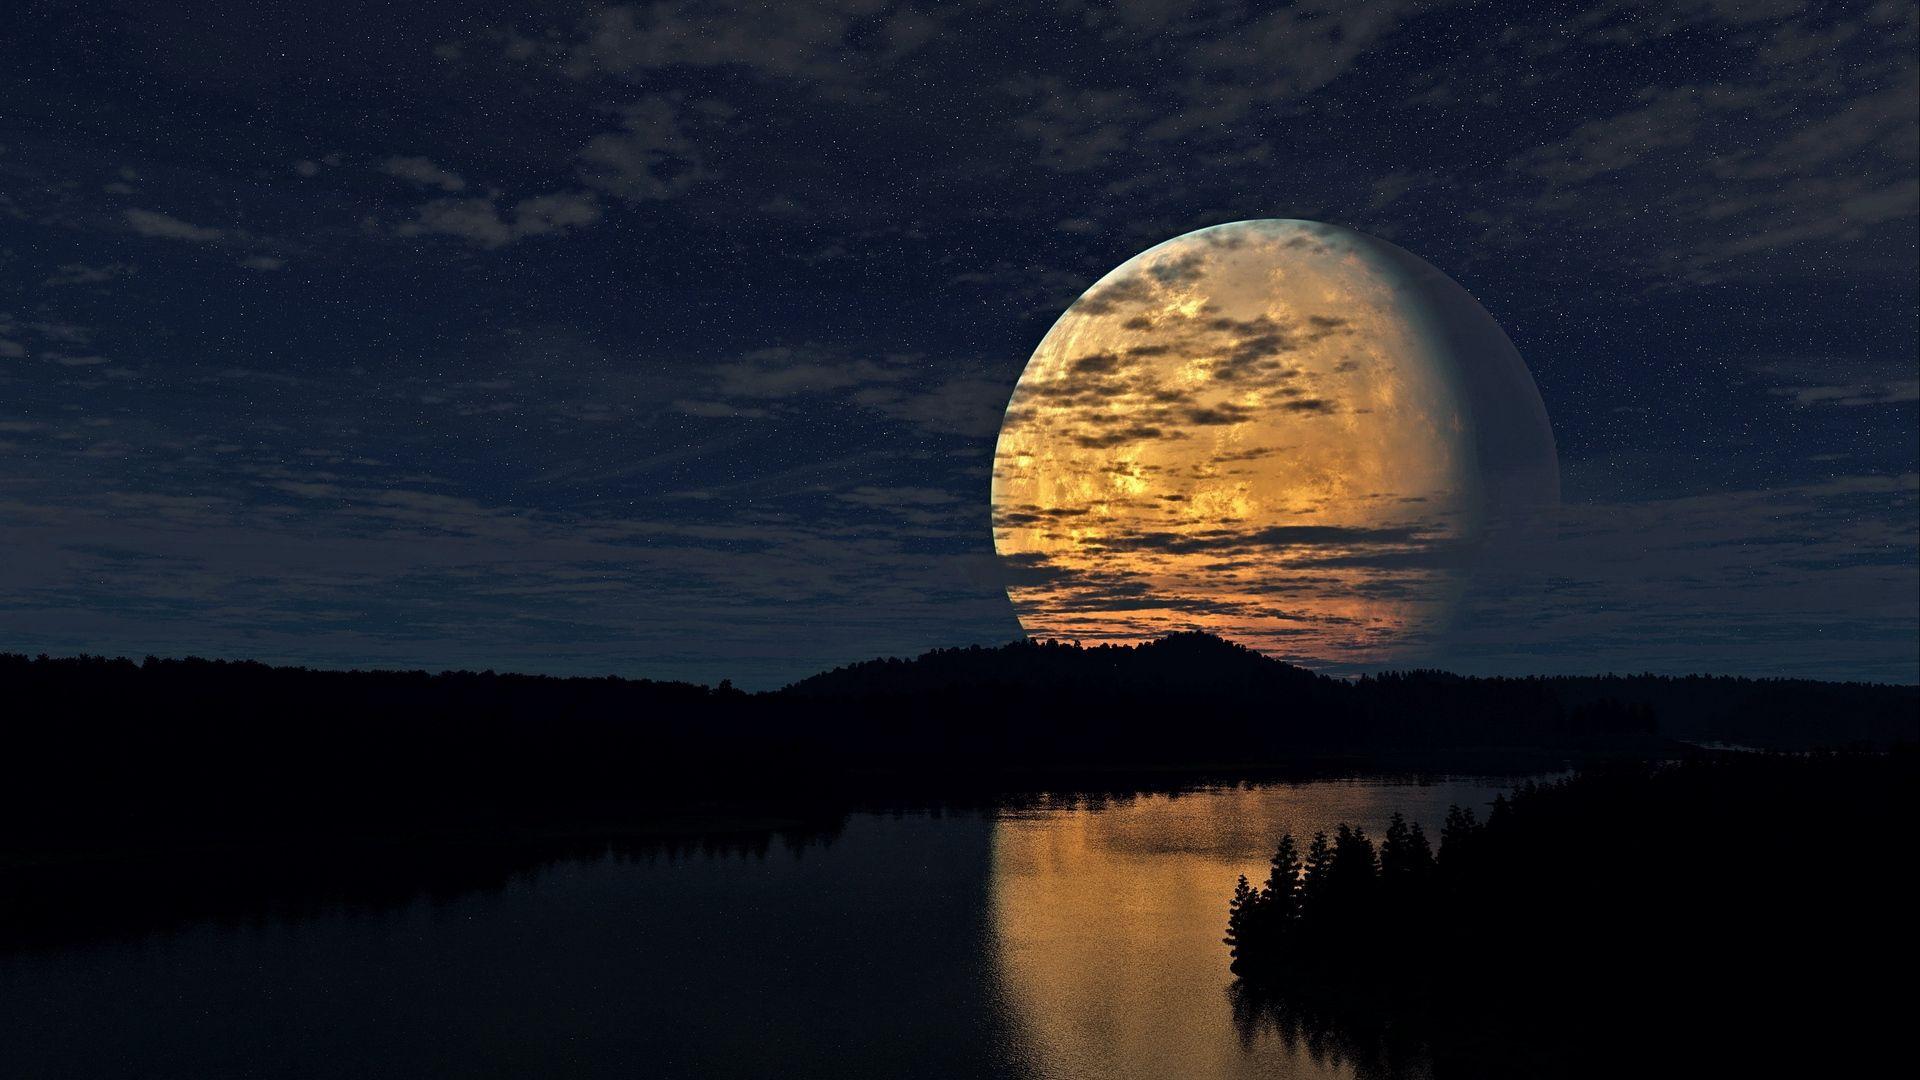 Download wallpaper 1920x1080 night, sky, moon, trees, river